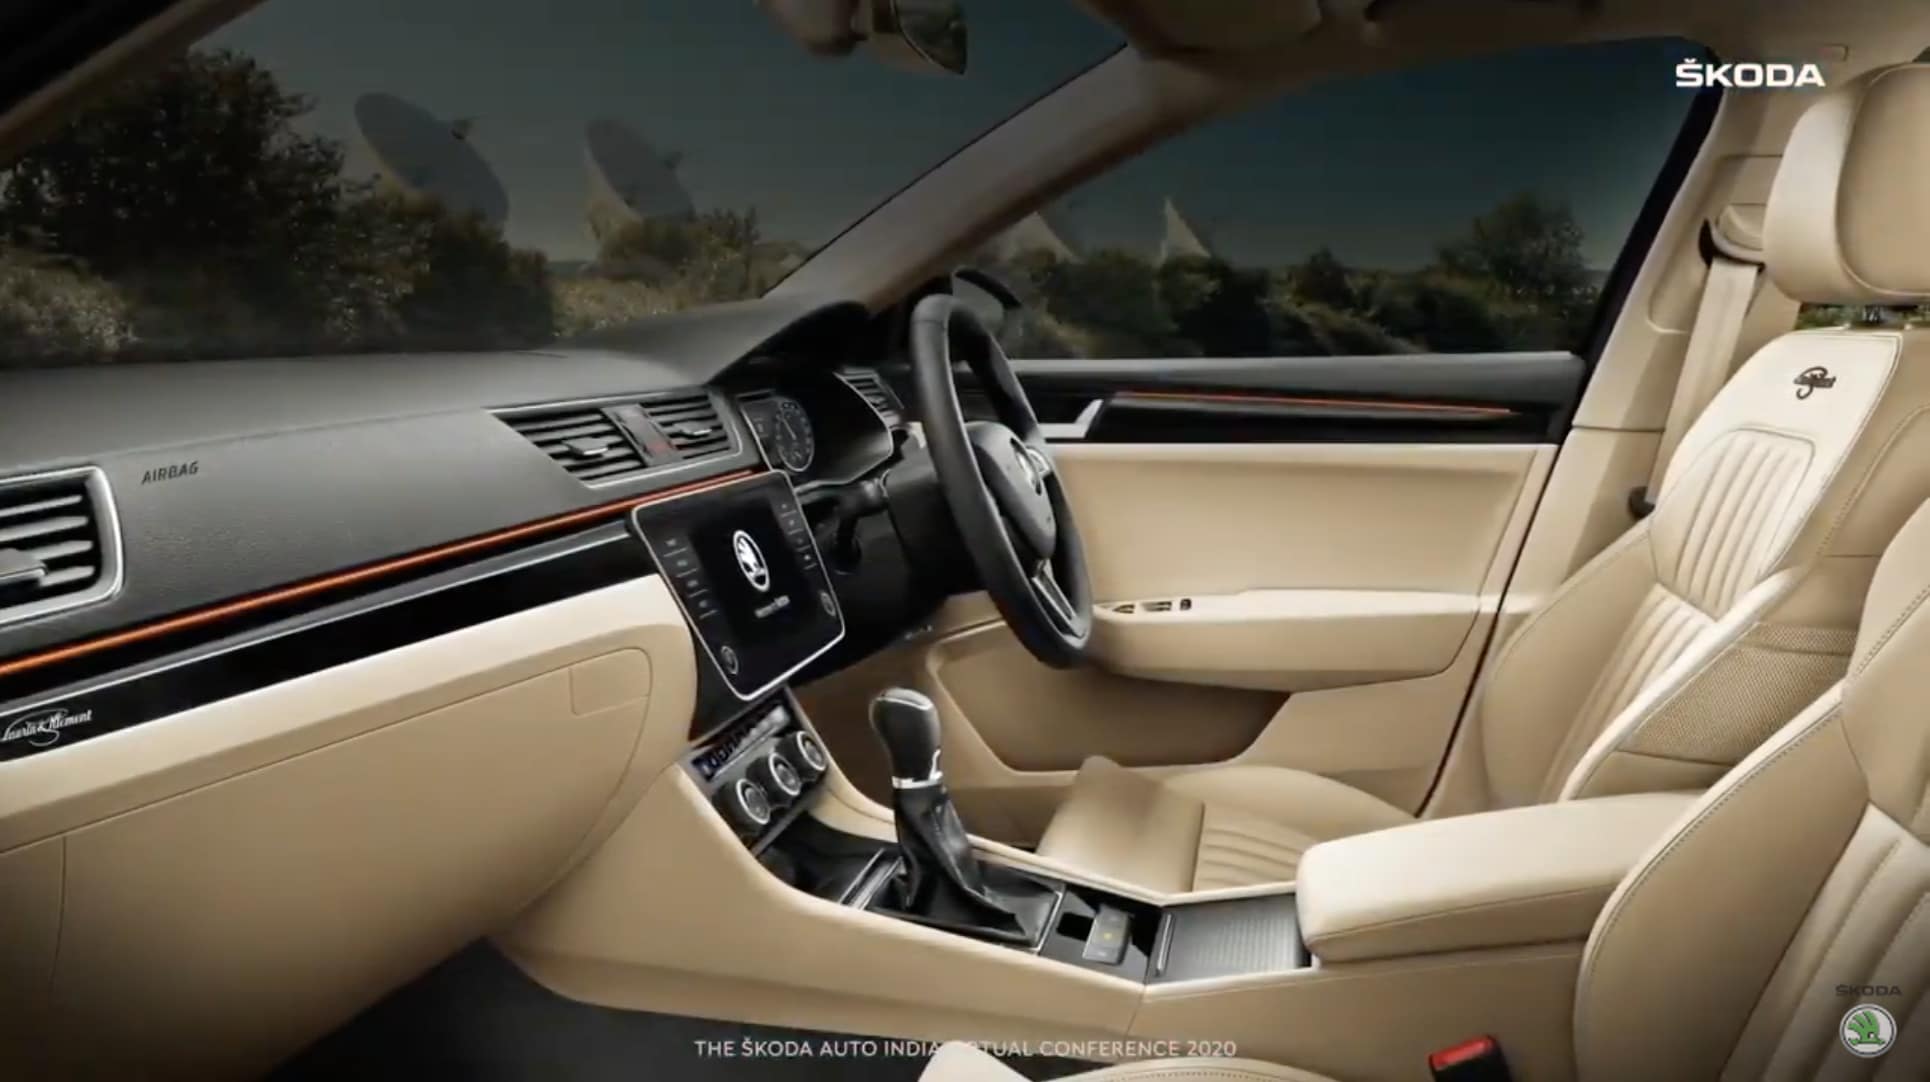 The interior of the new Skoda Superb sedan (Laurent & Klement trim) .